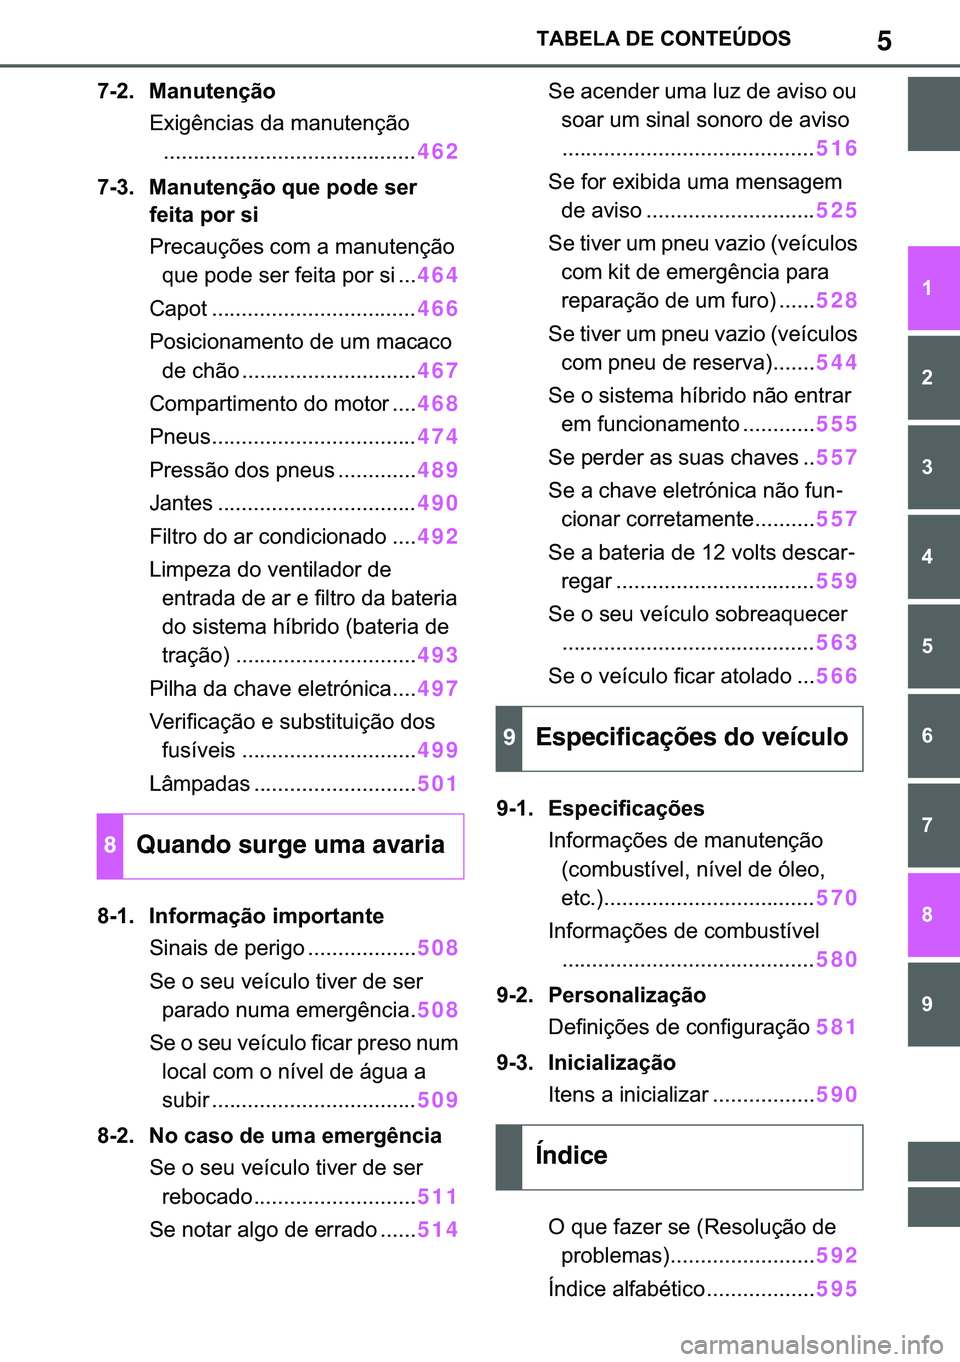 TOYOTA COROLLA 2020  Manual de utilização (in Portuguese) 5
�&�2�5�2�/�/�$ �+�9 �7�0�0�7 �(�(
�7�$�%�(�/�$���(��&�2�1�7�(�Ò��2�6
�
� � � � �
� �
�
���� �0�D�Q�X�W�H�Q�o�m�R
�(�[�L�J�r�Q�F�L�D�V��G�D��P�D�Q�X�W�H�Q�o�m�R
���������